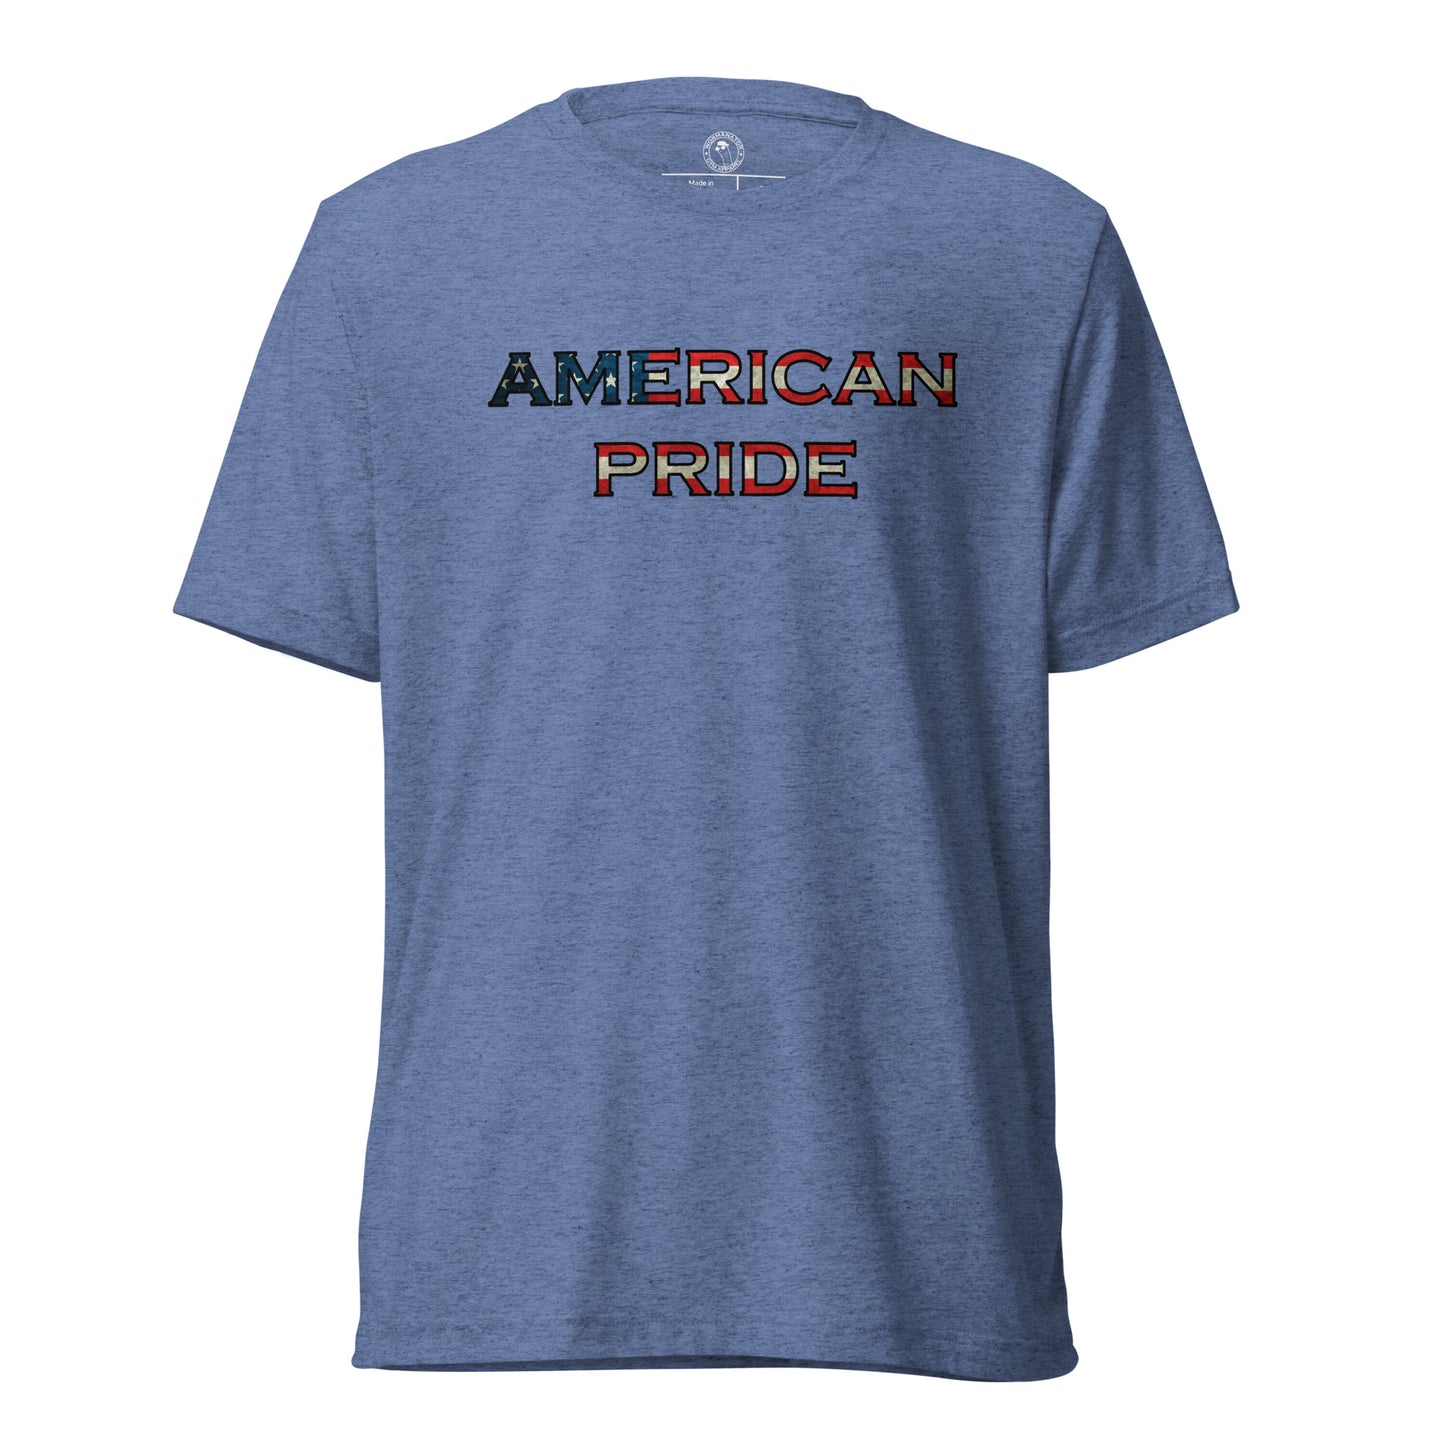 American Pride T-Shirt in Blue Triblend